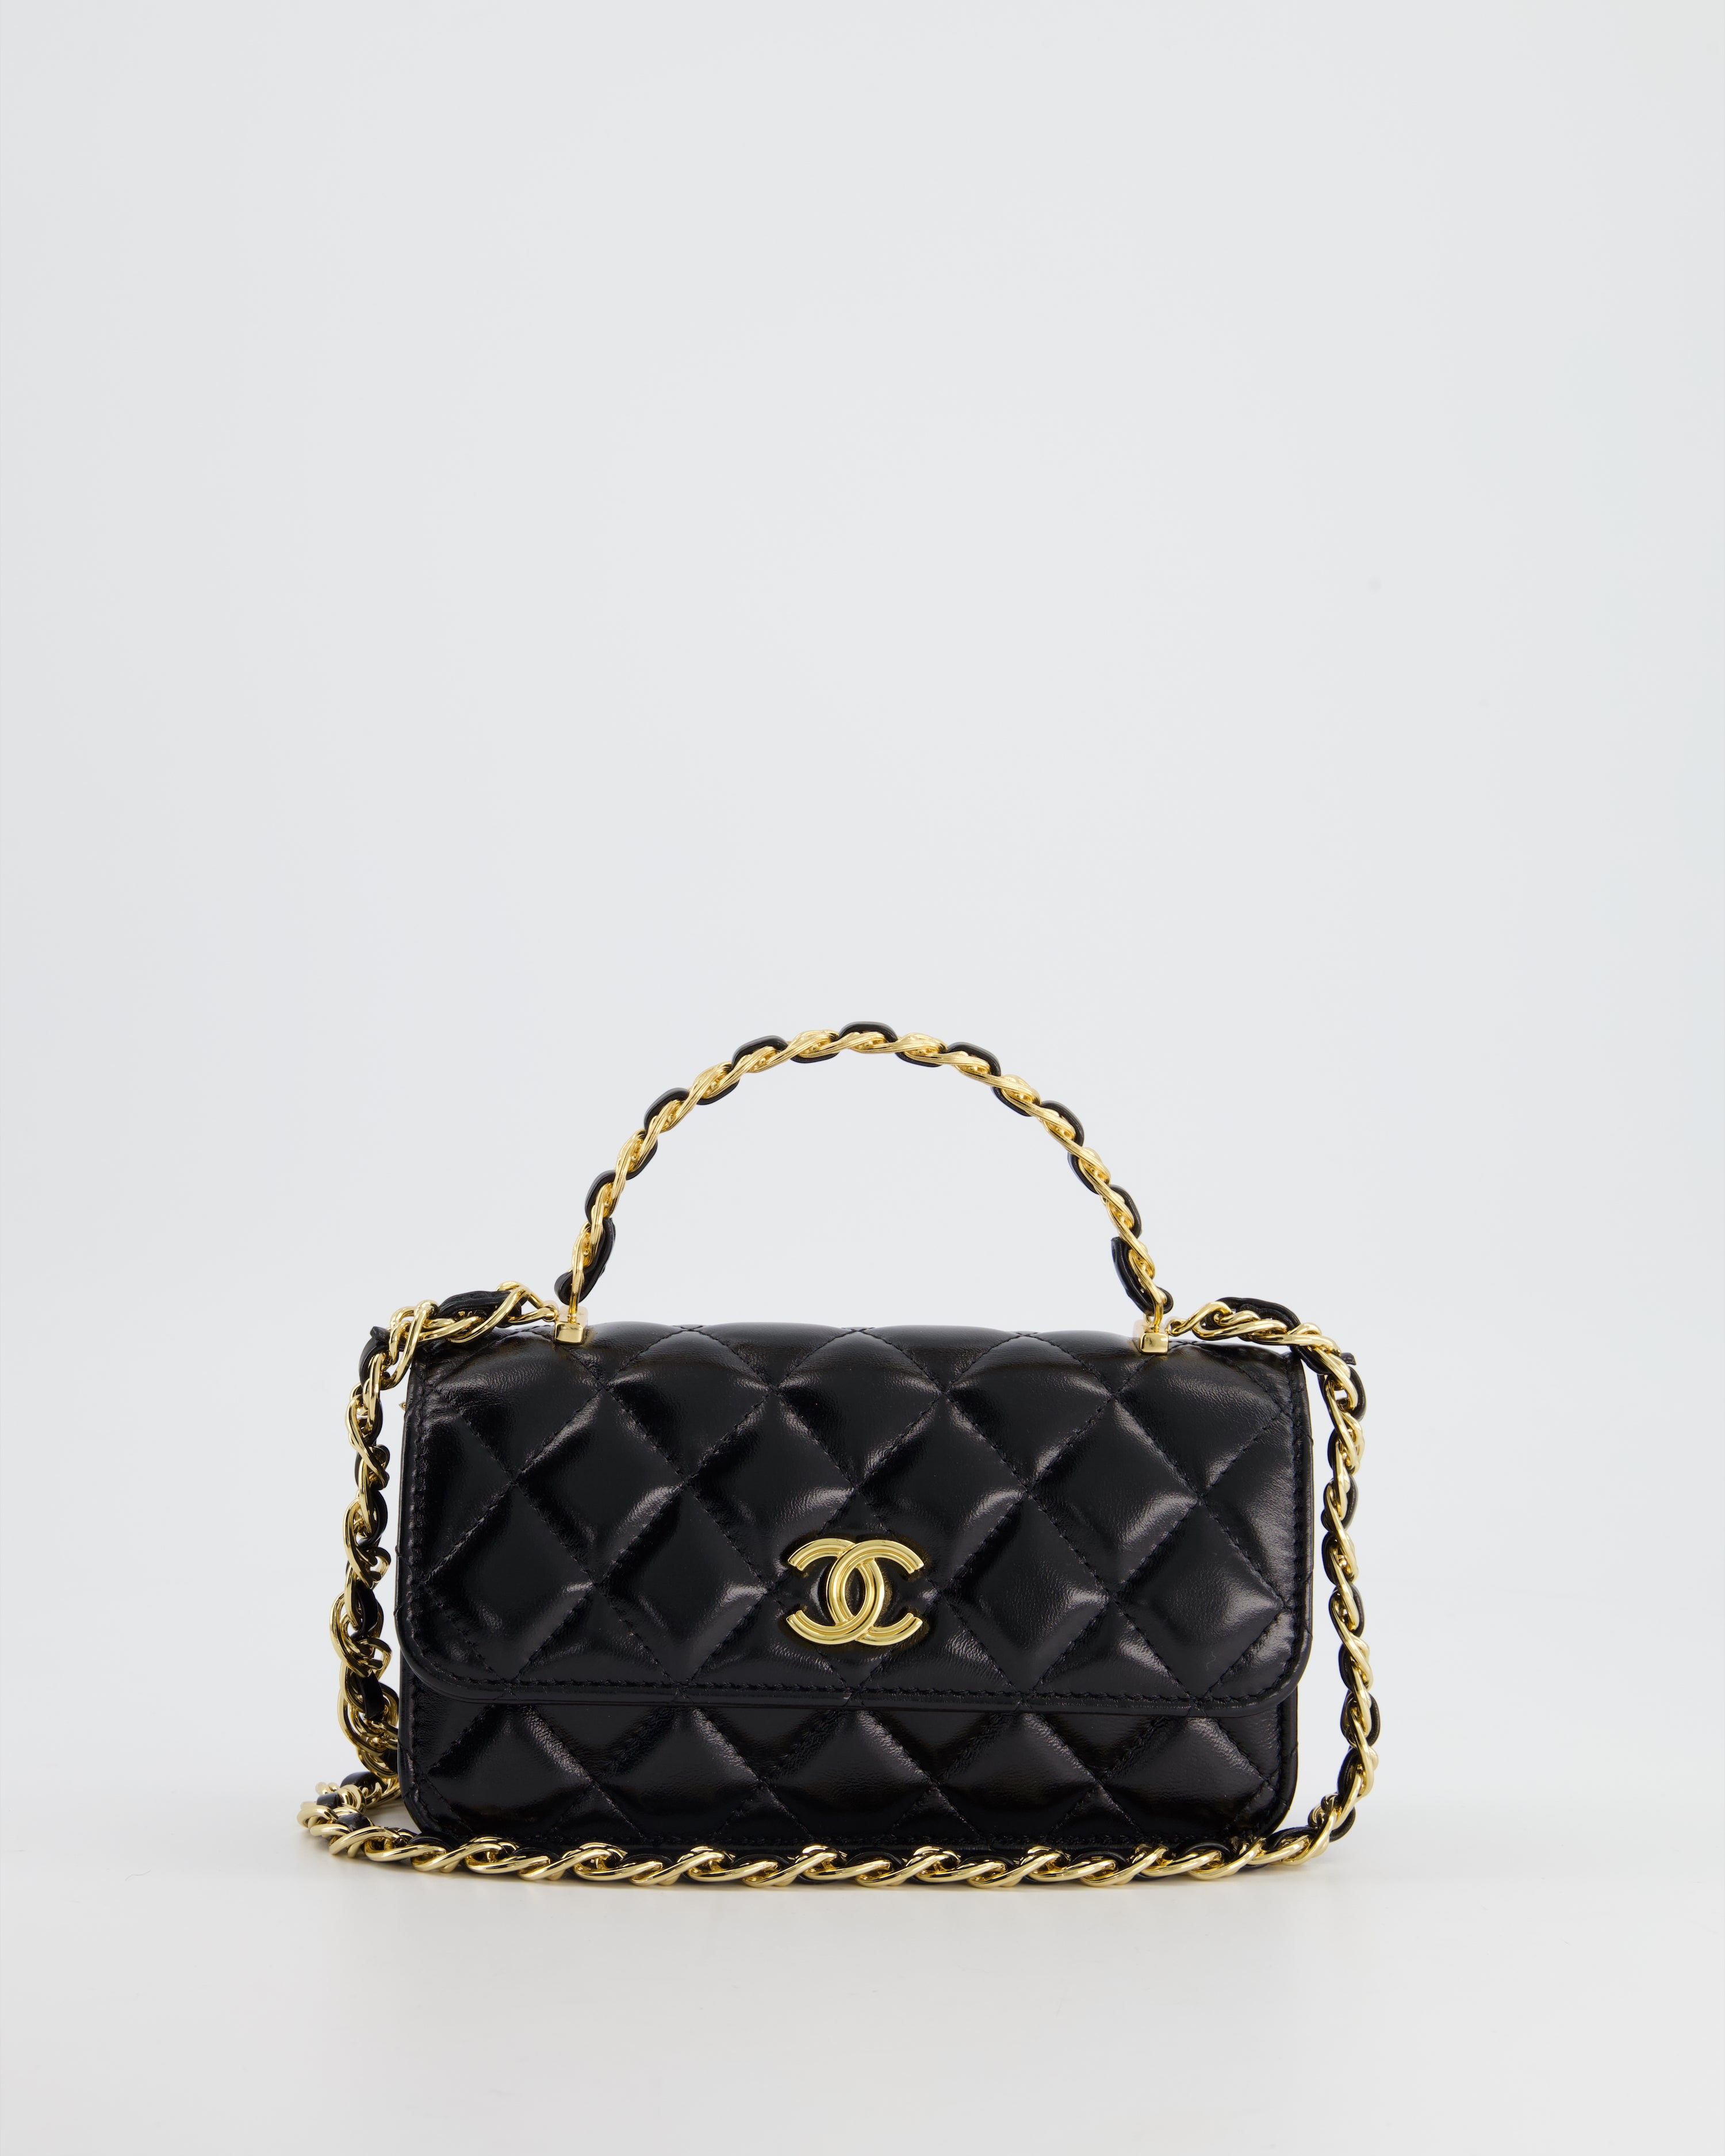 Chanel Interlocking CC Logo Sneakers - A&V Pawn